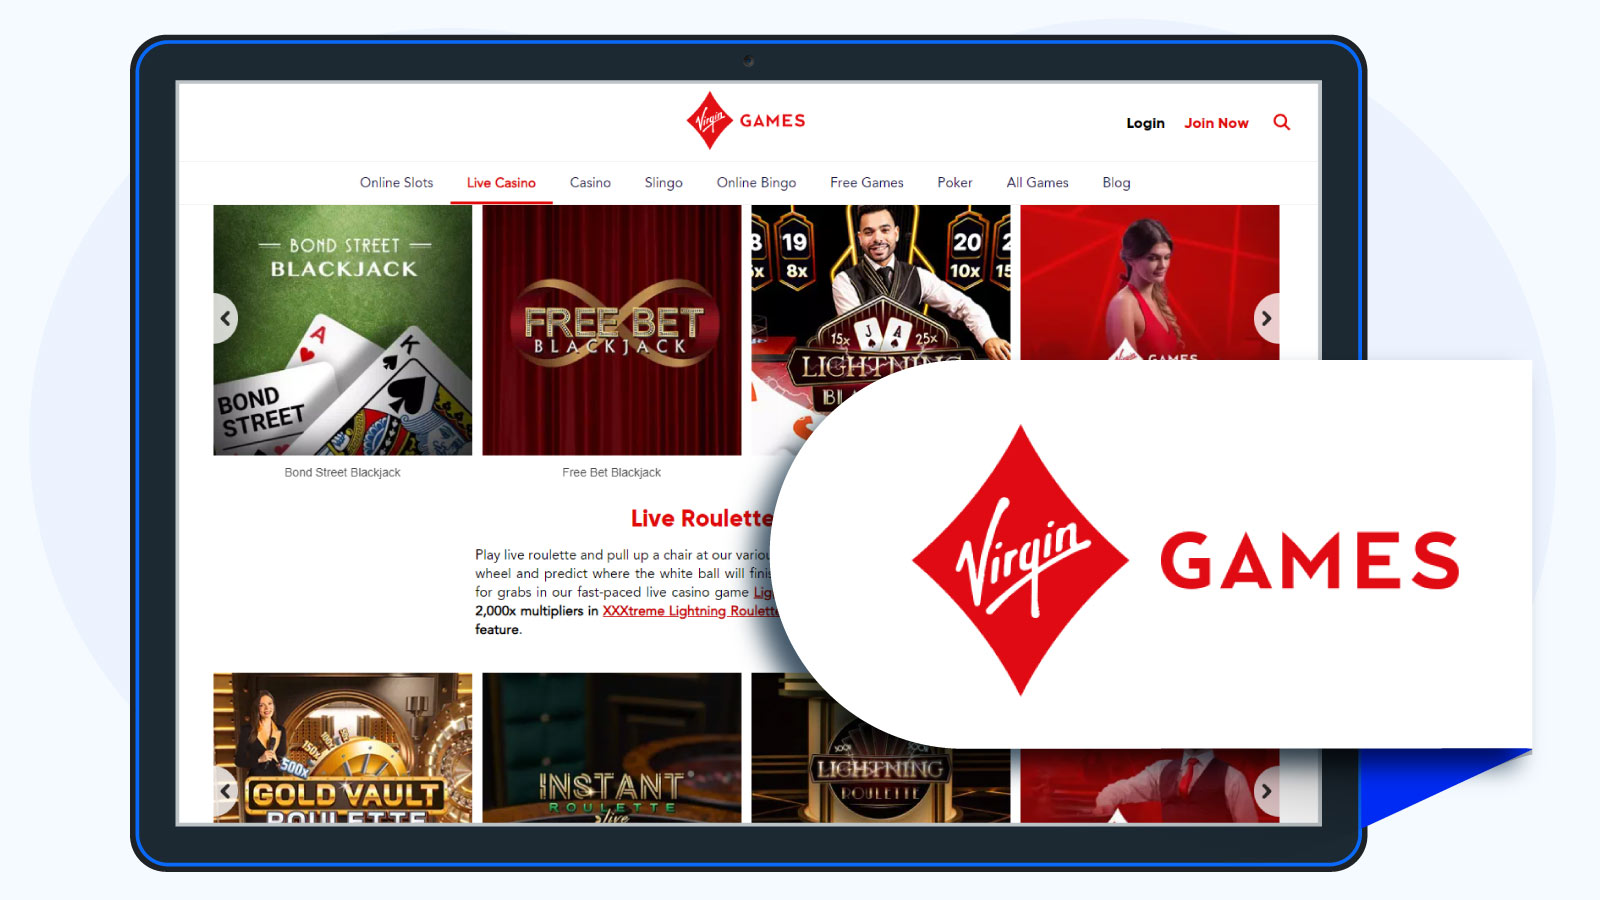 Virgin Games – Deposit £10 Get 30 Free Spins No Wagering